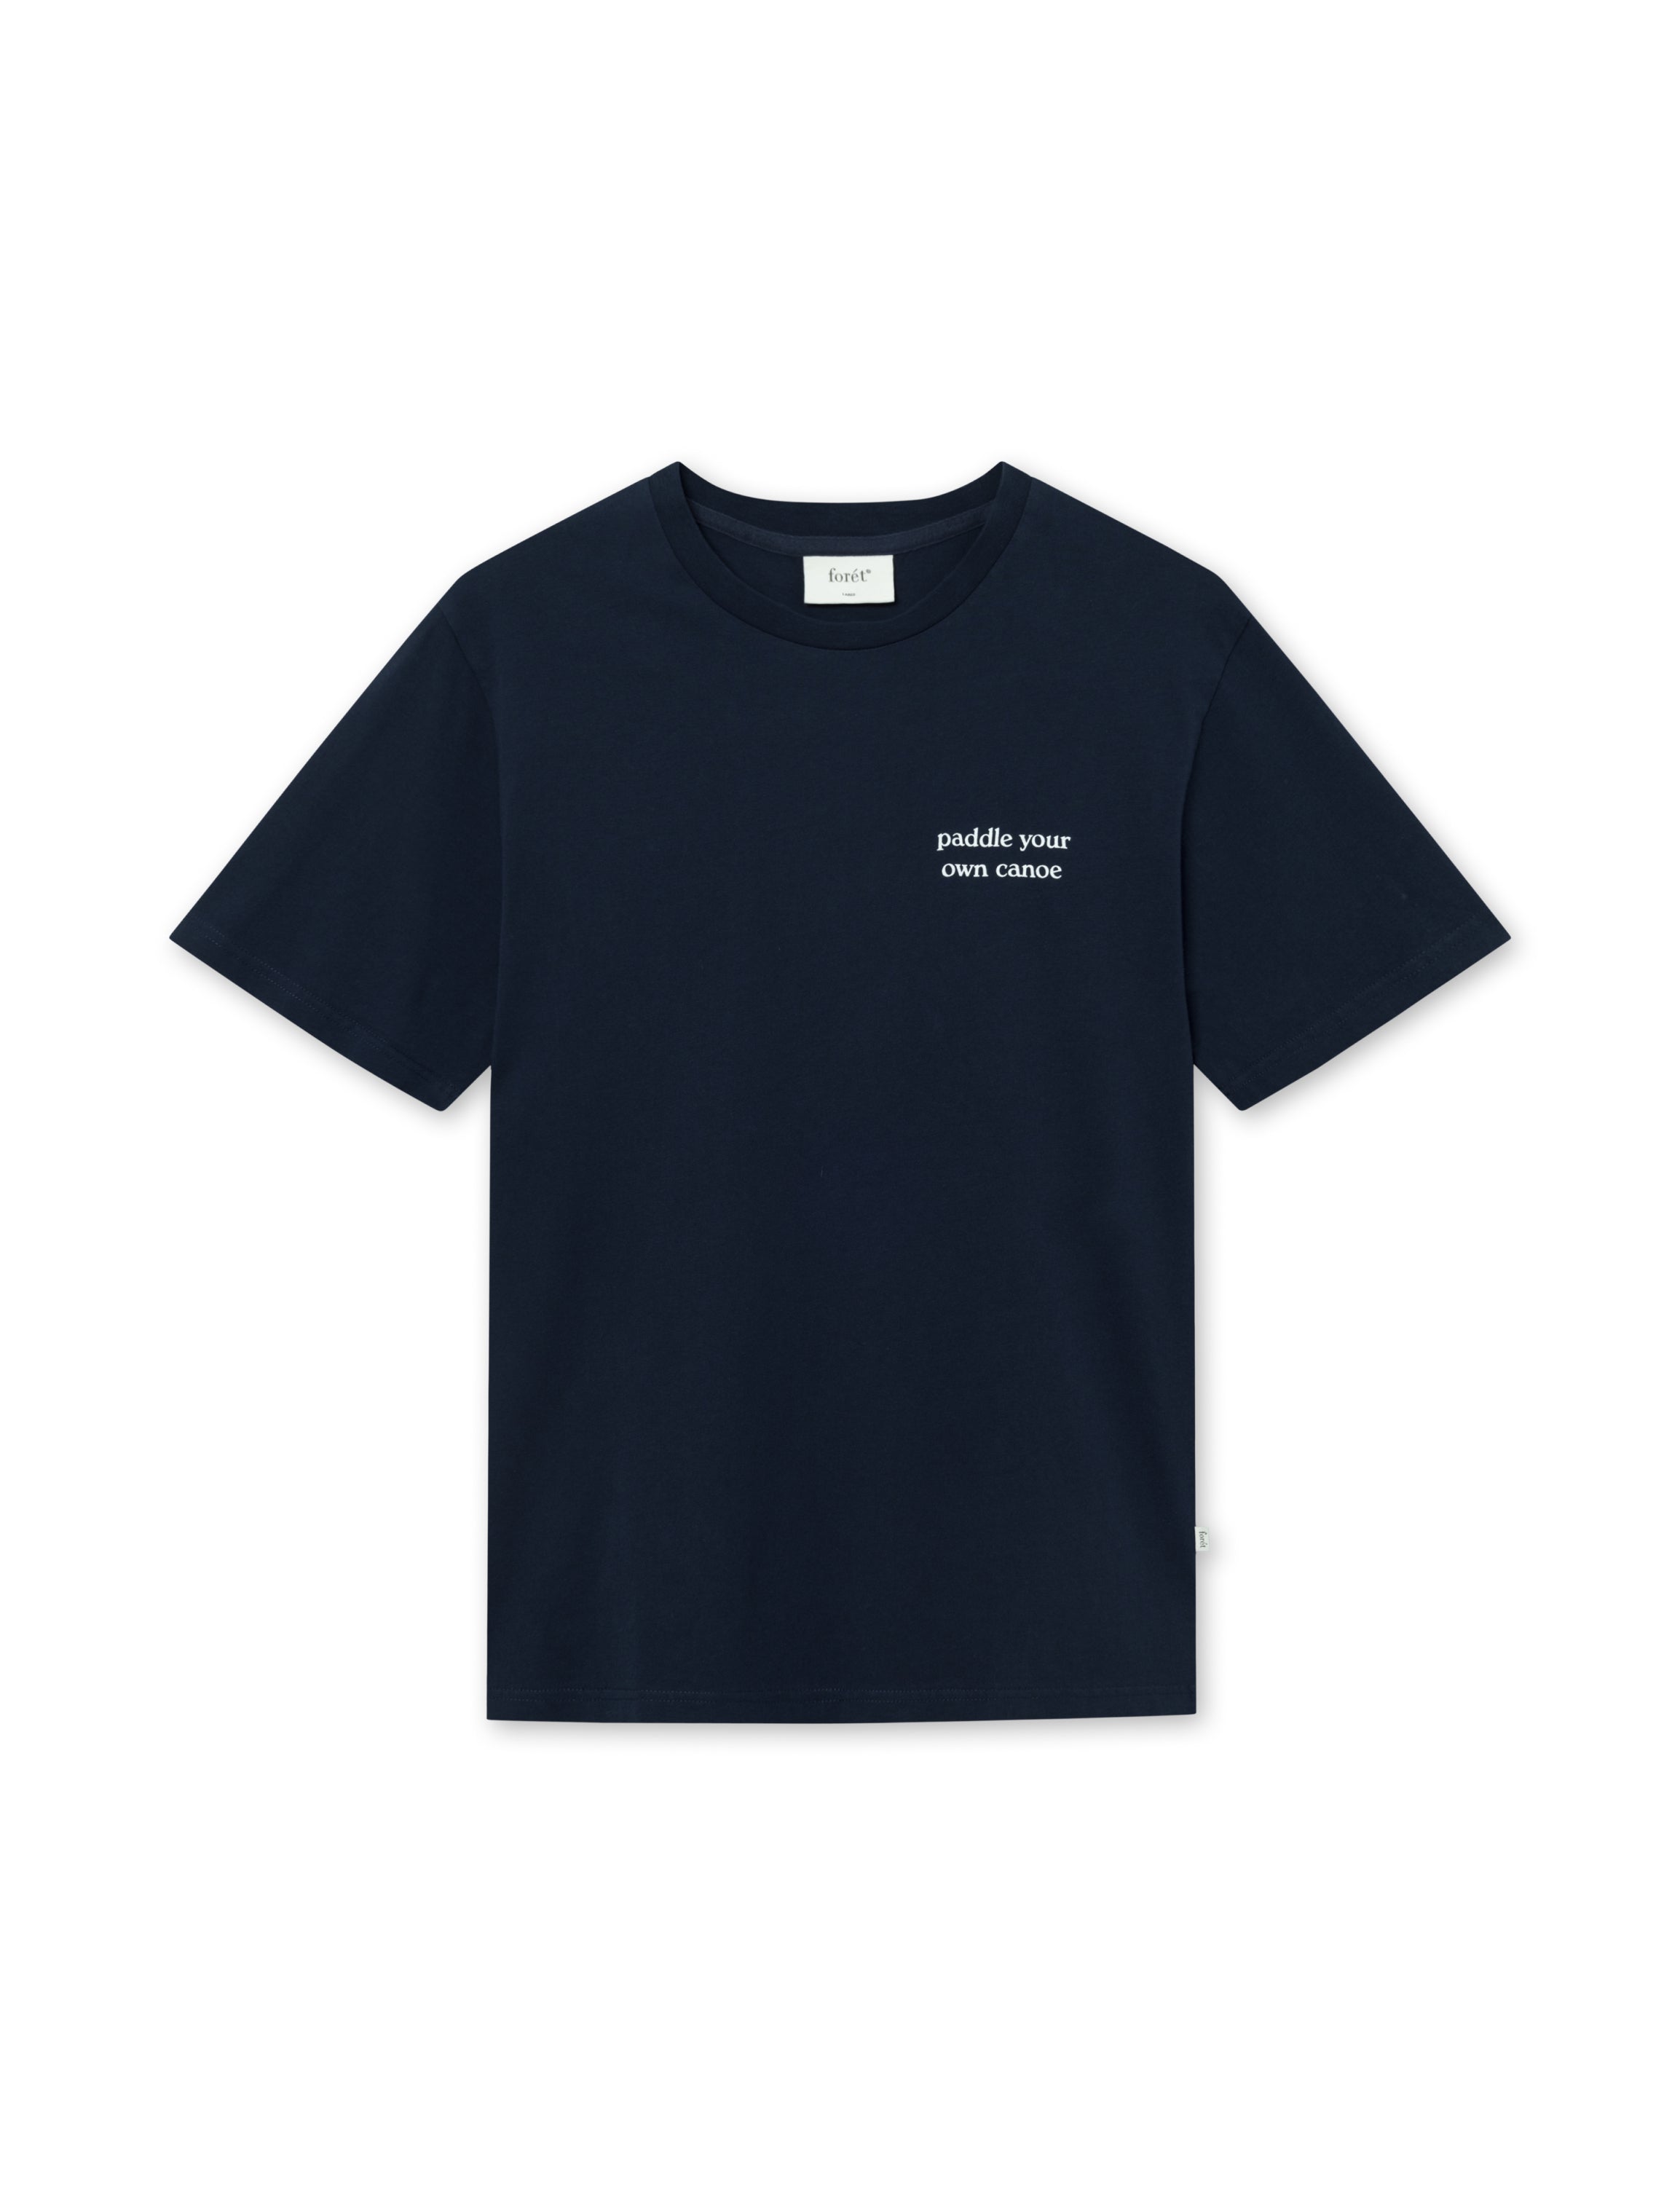 Foret Tip T-Shirt - Navy